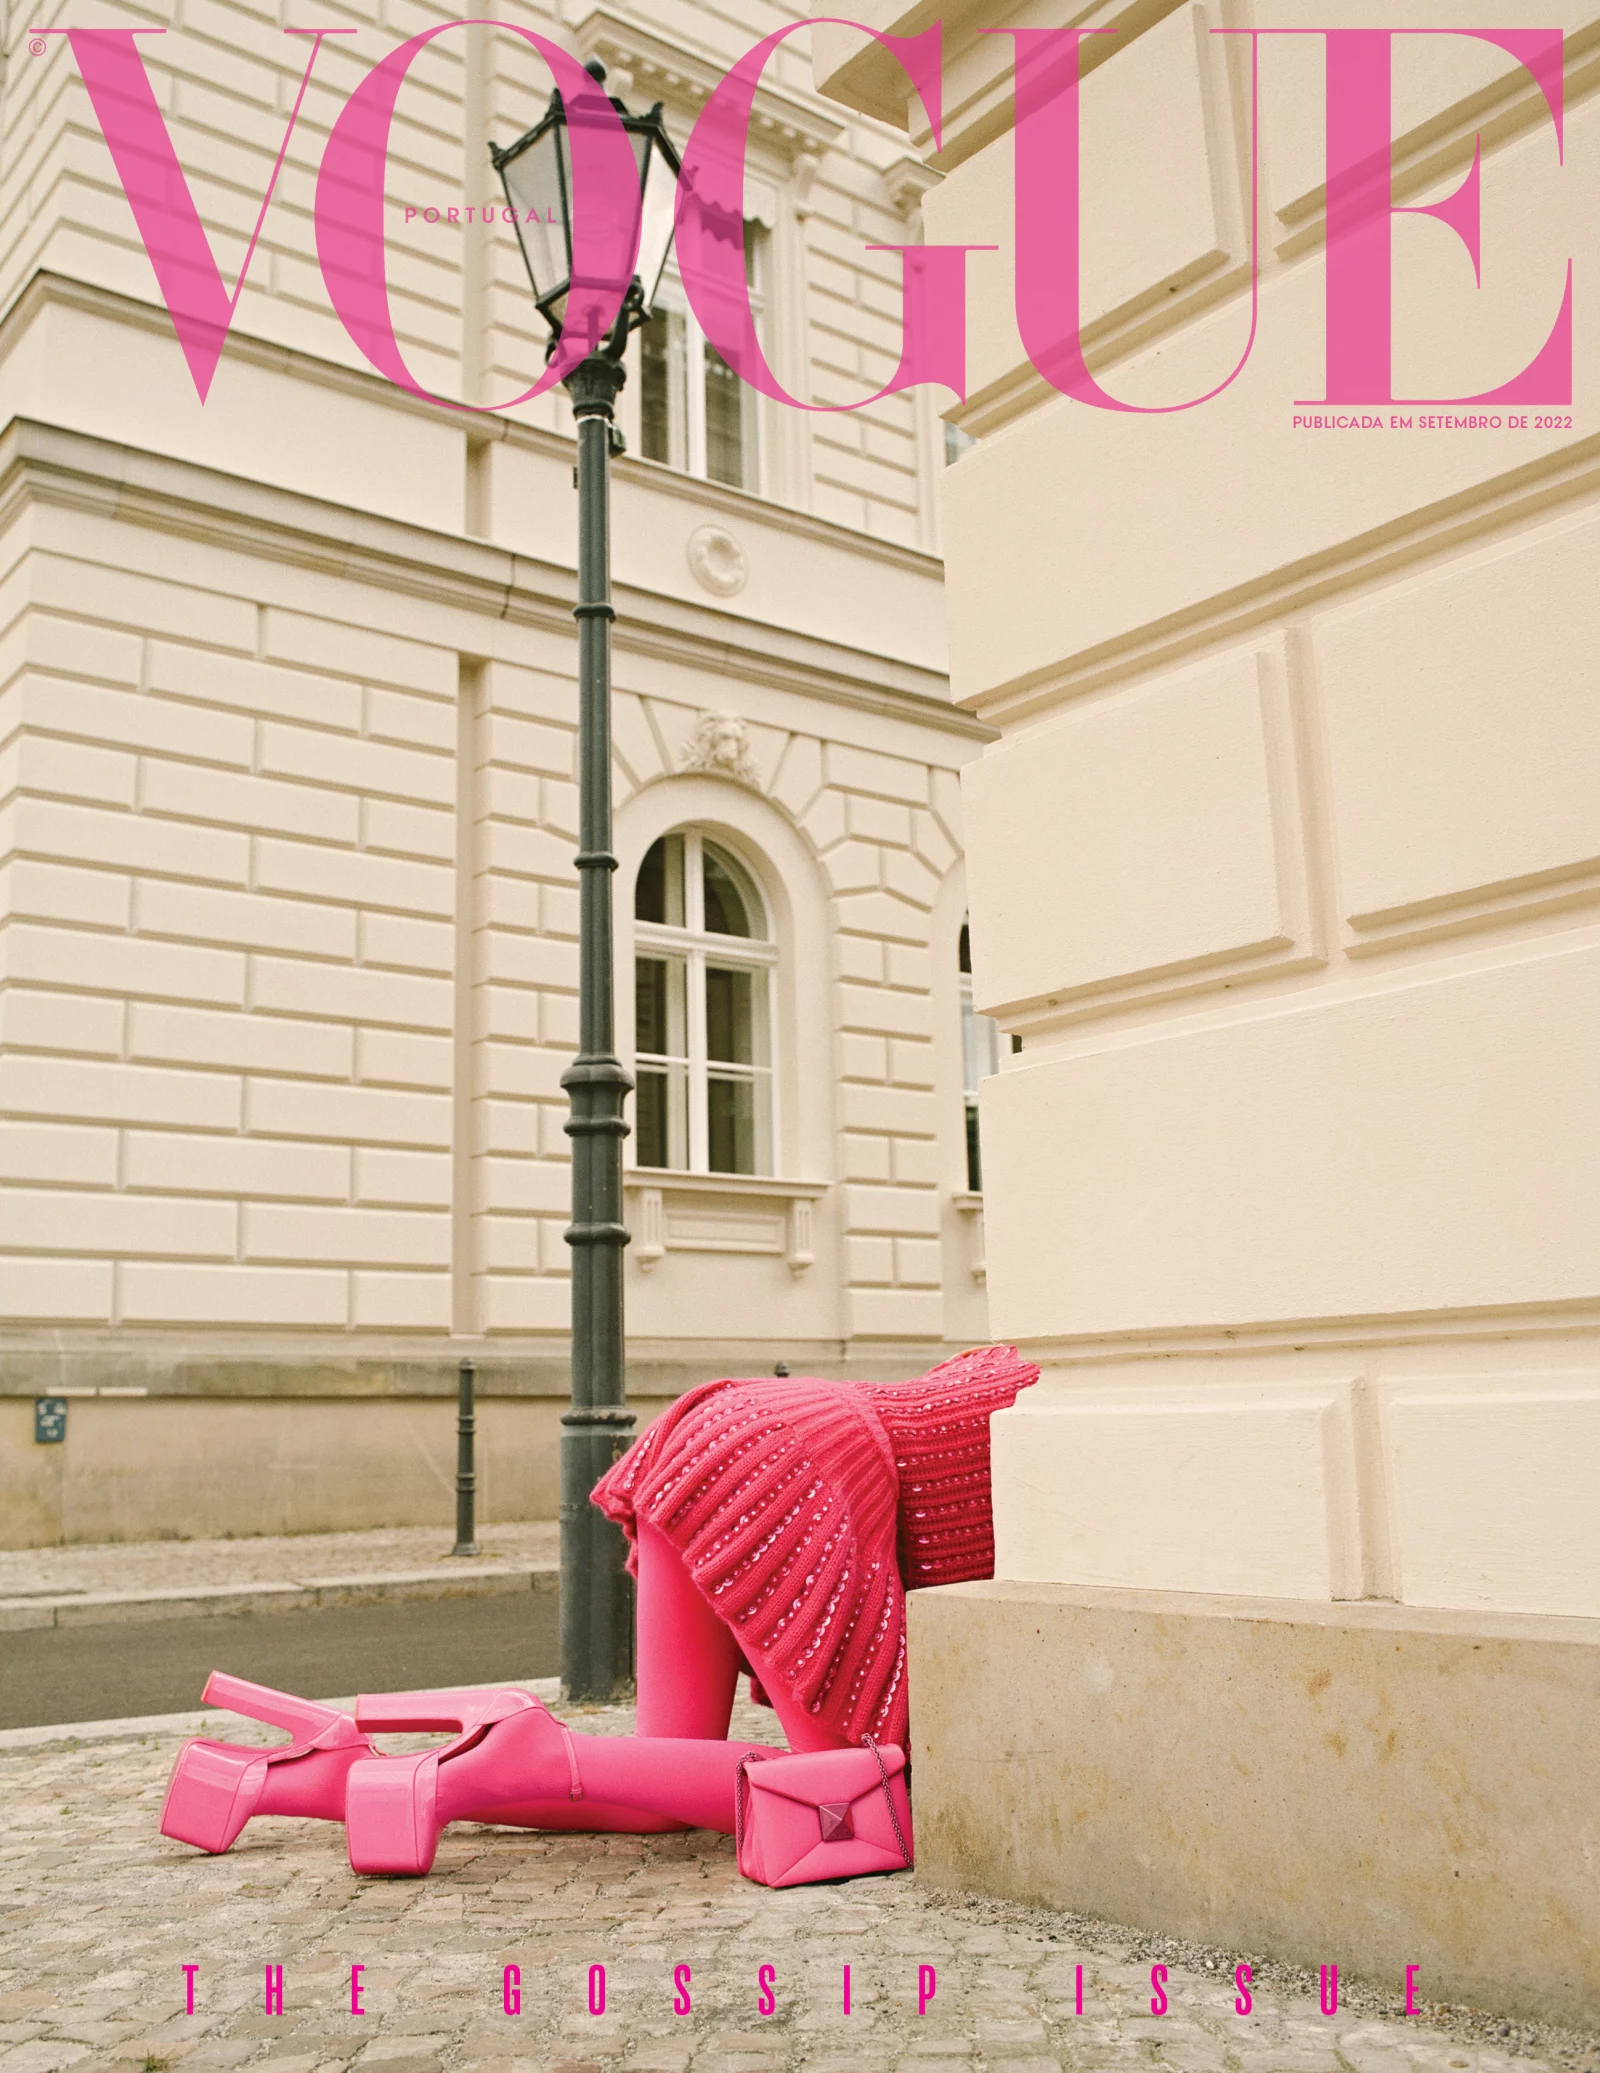 Vogue Portugal 1 by Katia WIK